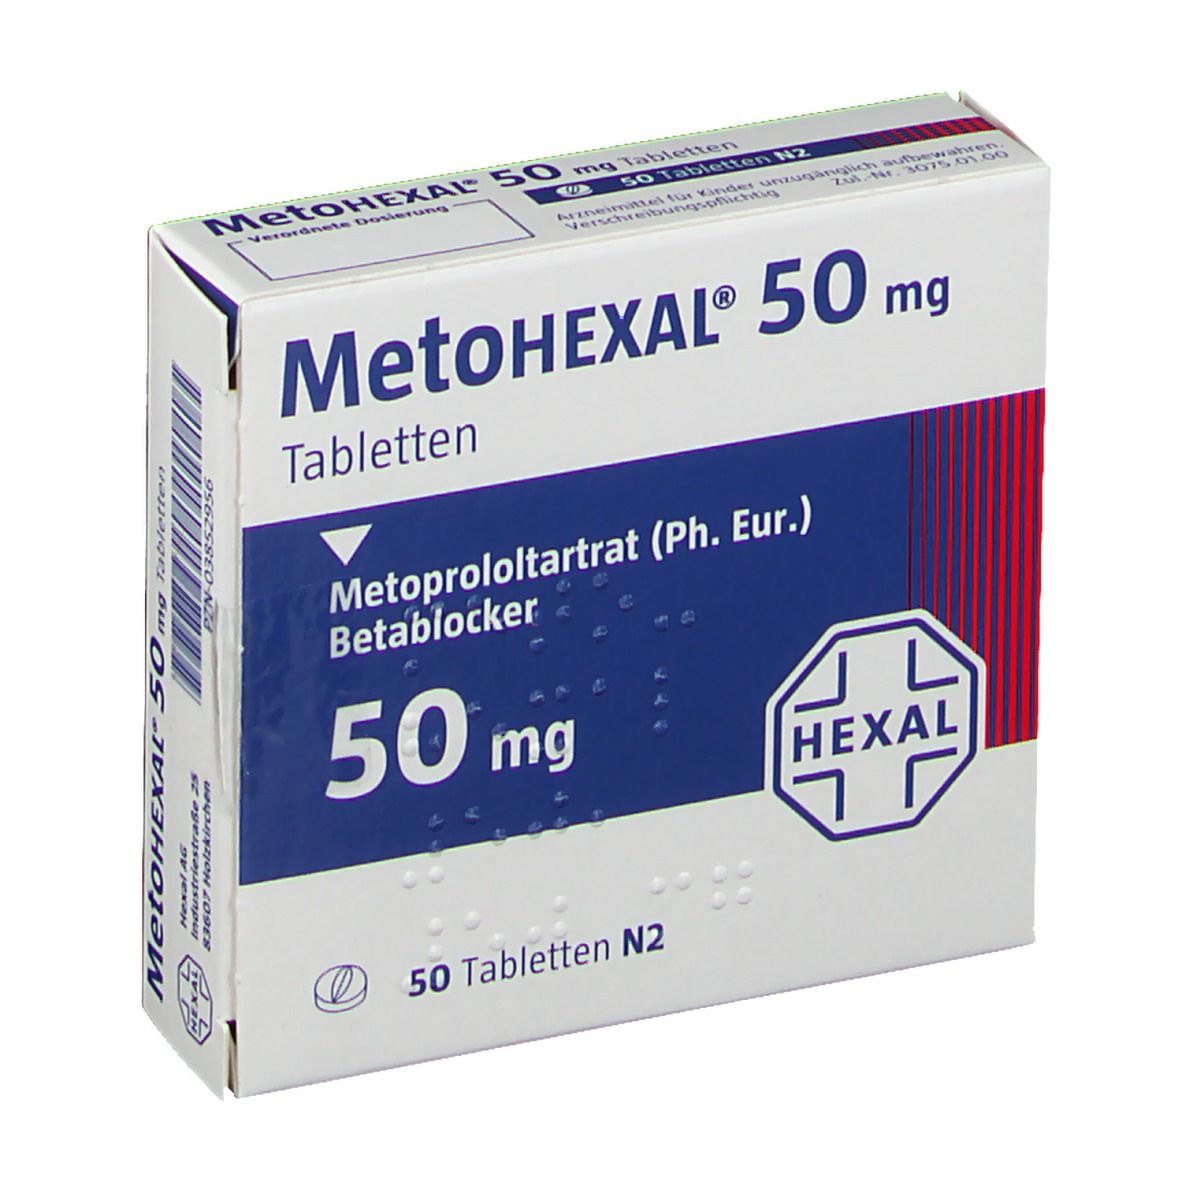 MetoHEXAL® 50 mg